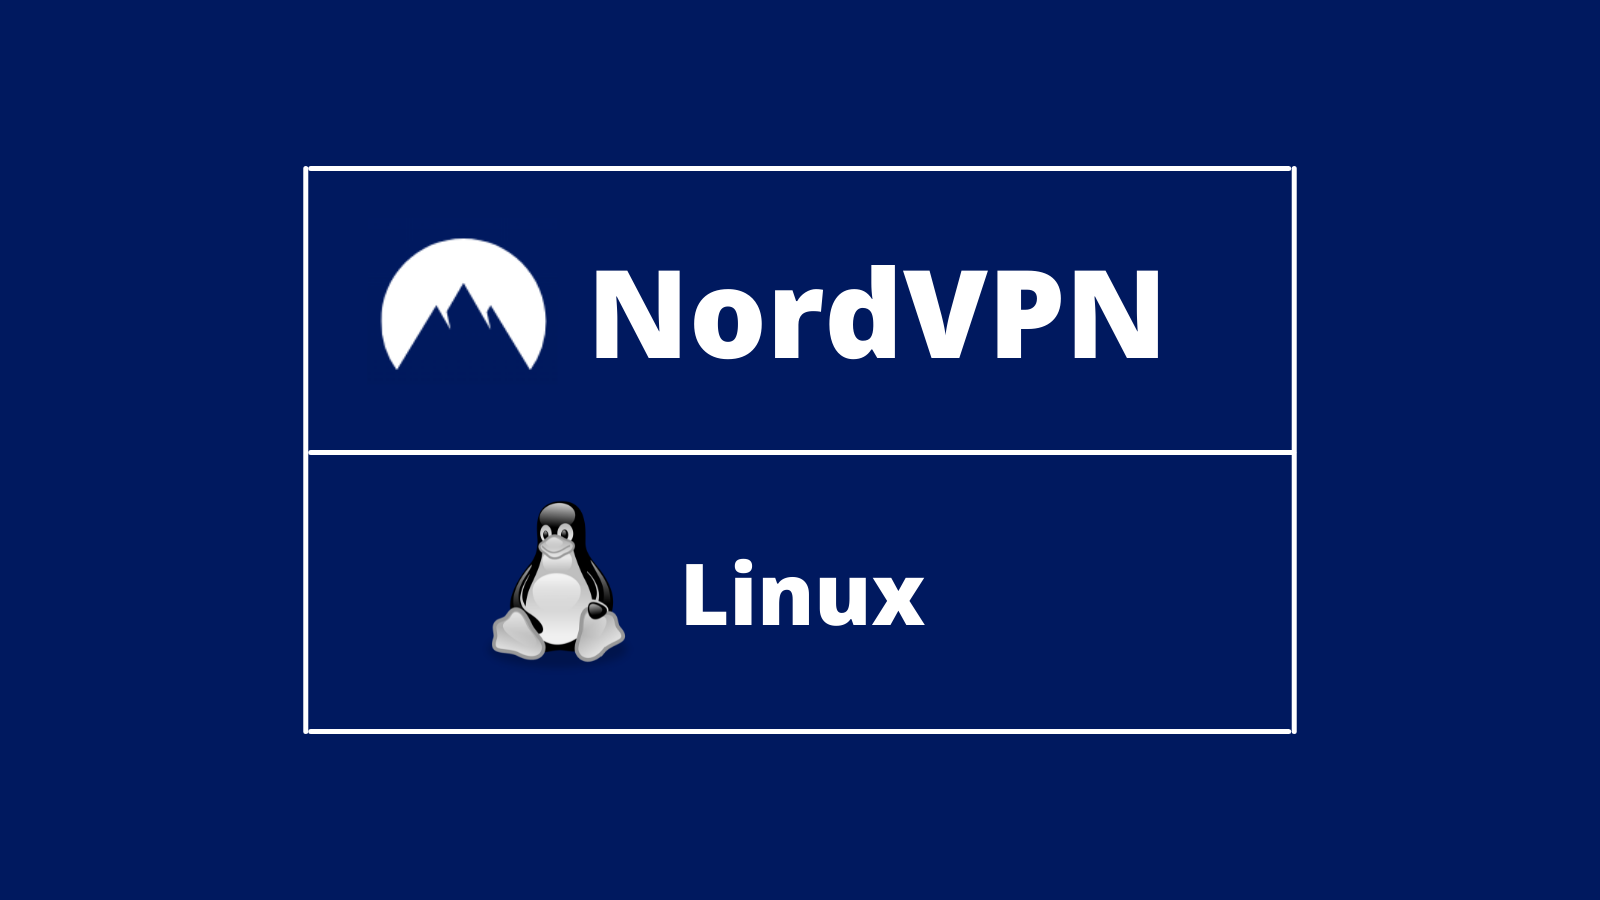 nordvpn ubuntu download